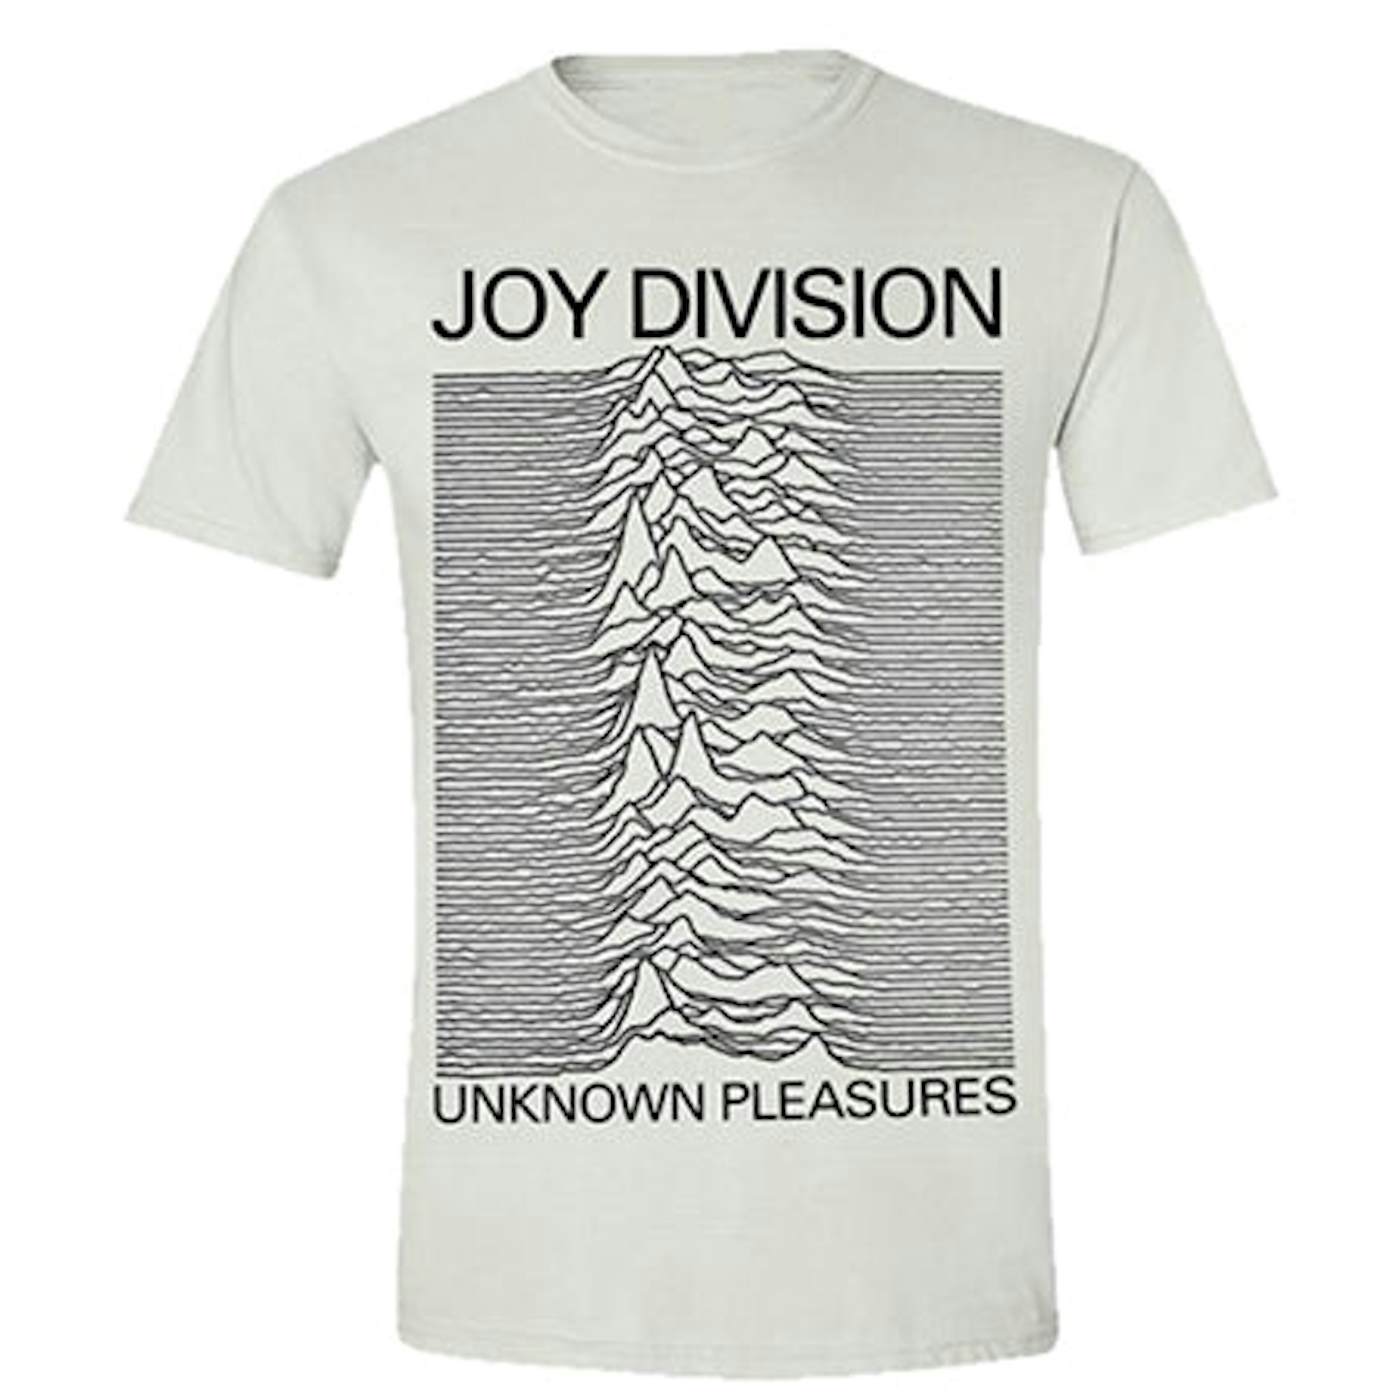 Joy Division Shirts, Posters, Hoodies & Vinyl Albums Store